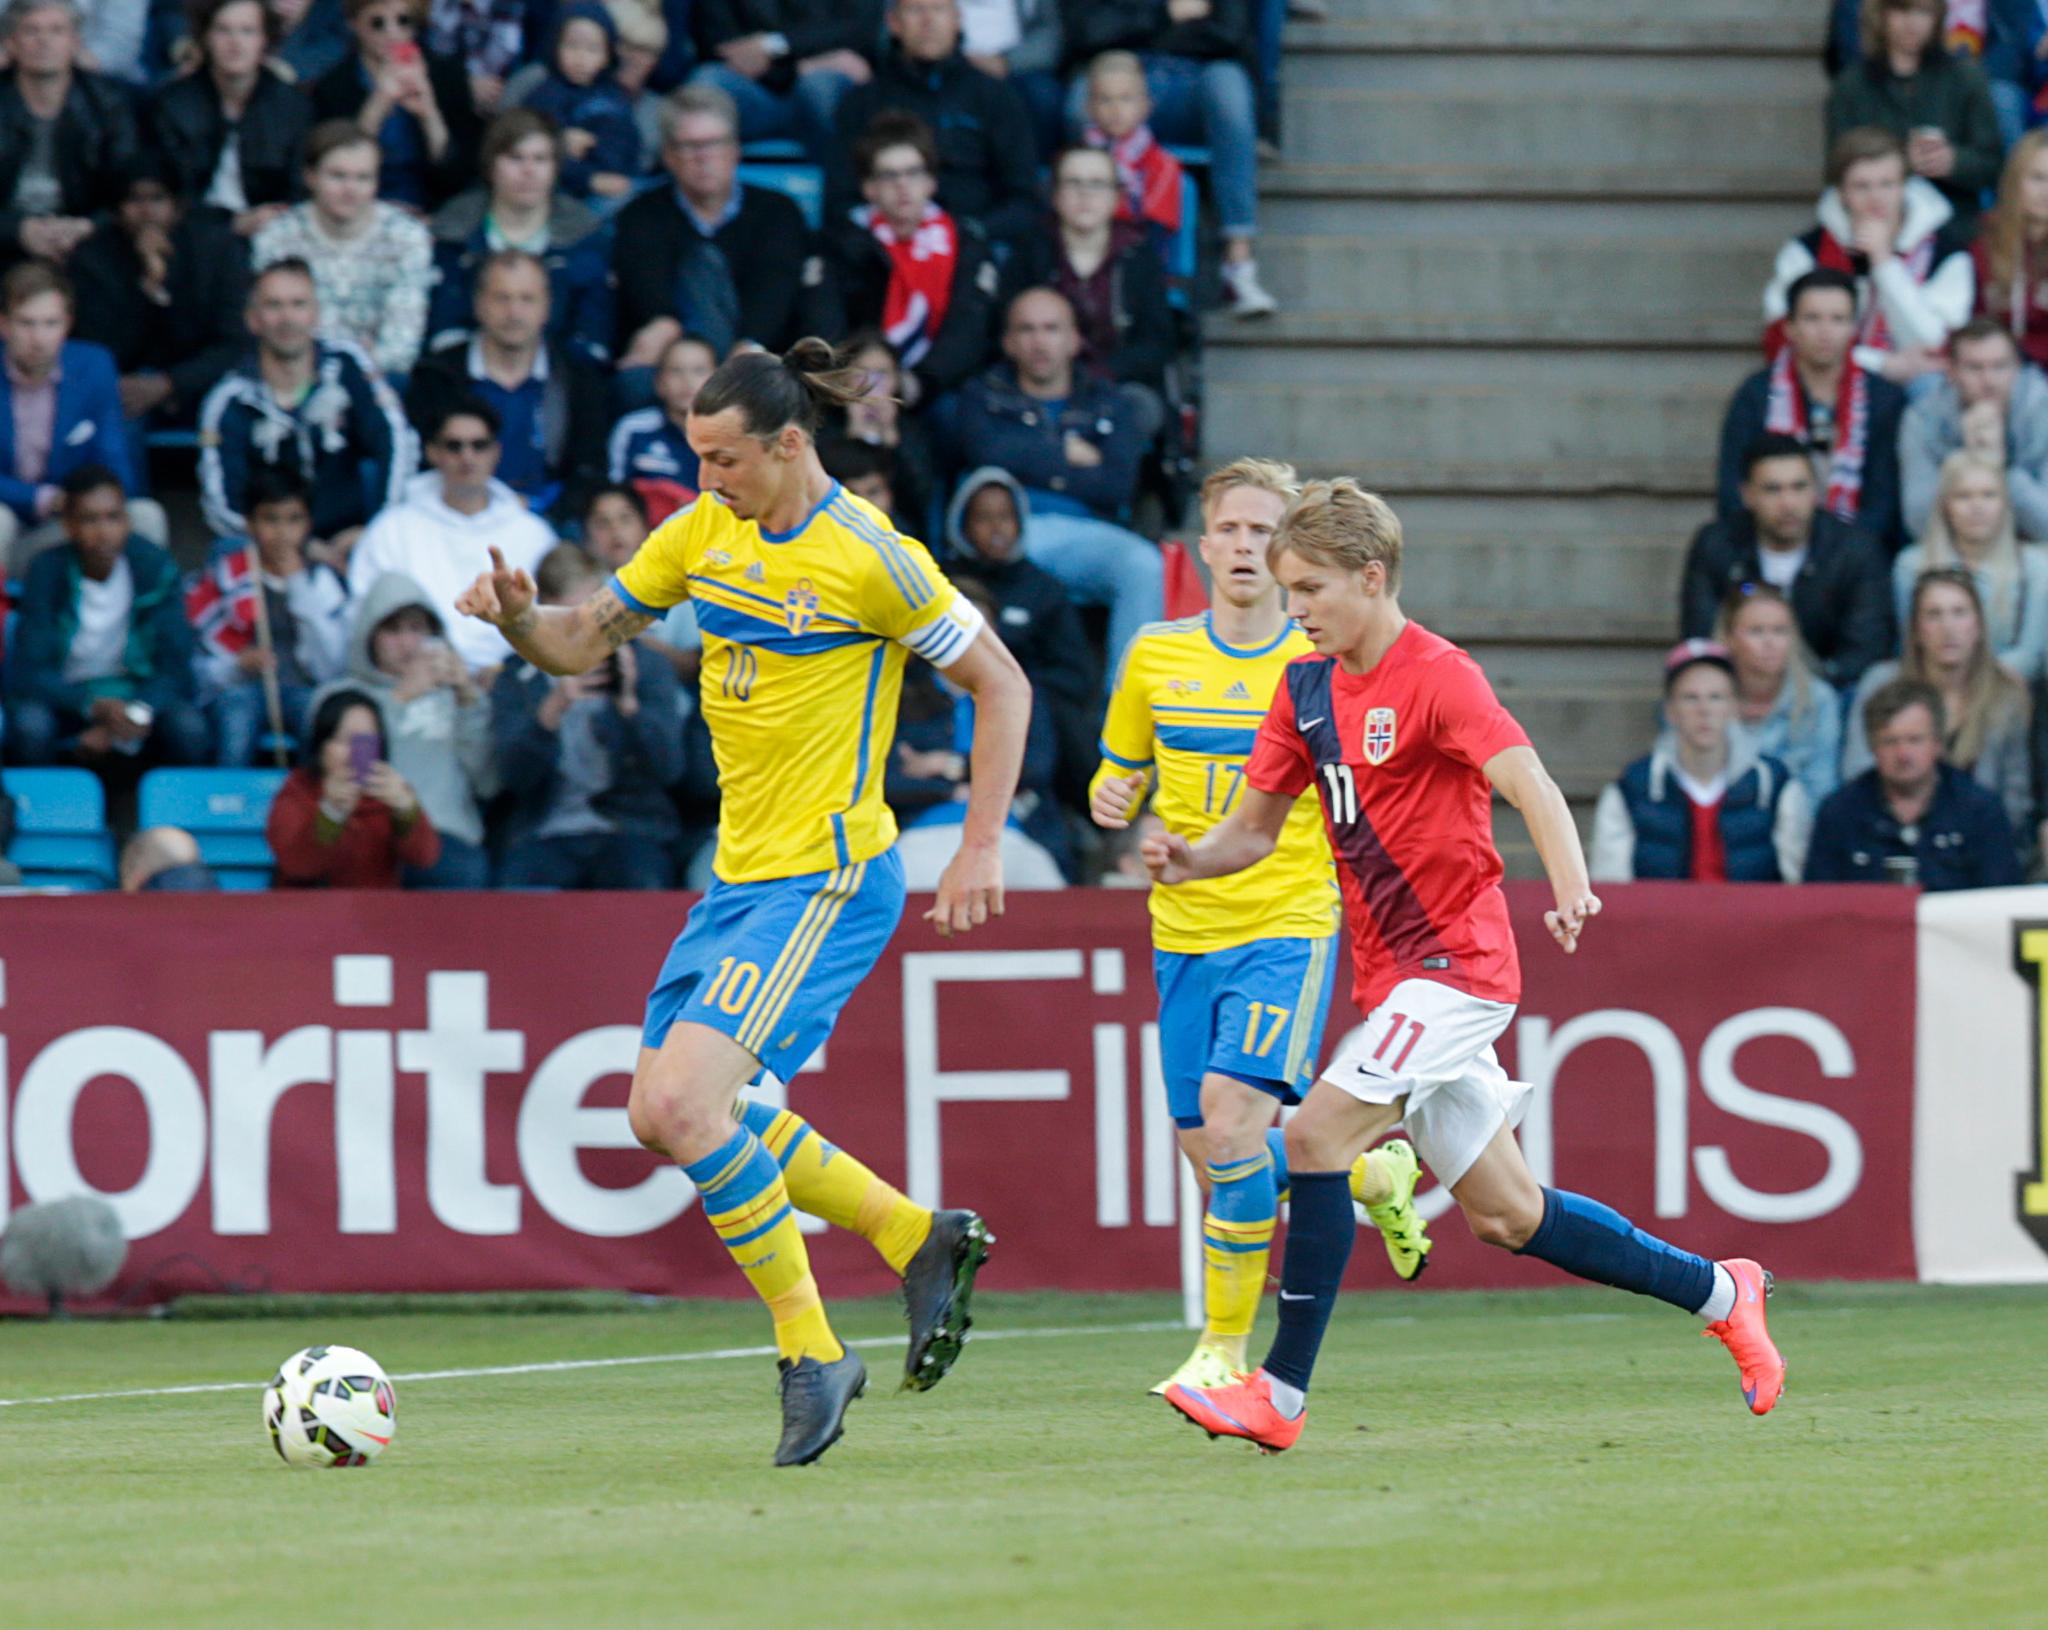 DRØMMER OM NORGE: Sverige-spillerne ønsker å møte Norge i et eventuelt omspill om EM. Her er Zlatan Ibrahimovic i duell med Martin Ødegaard.